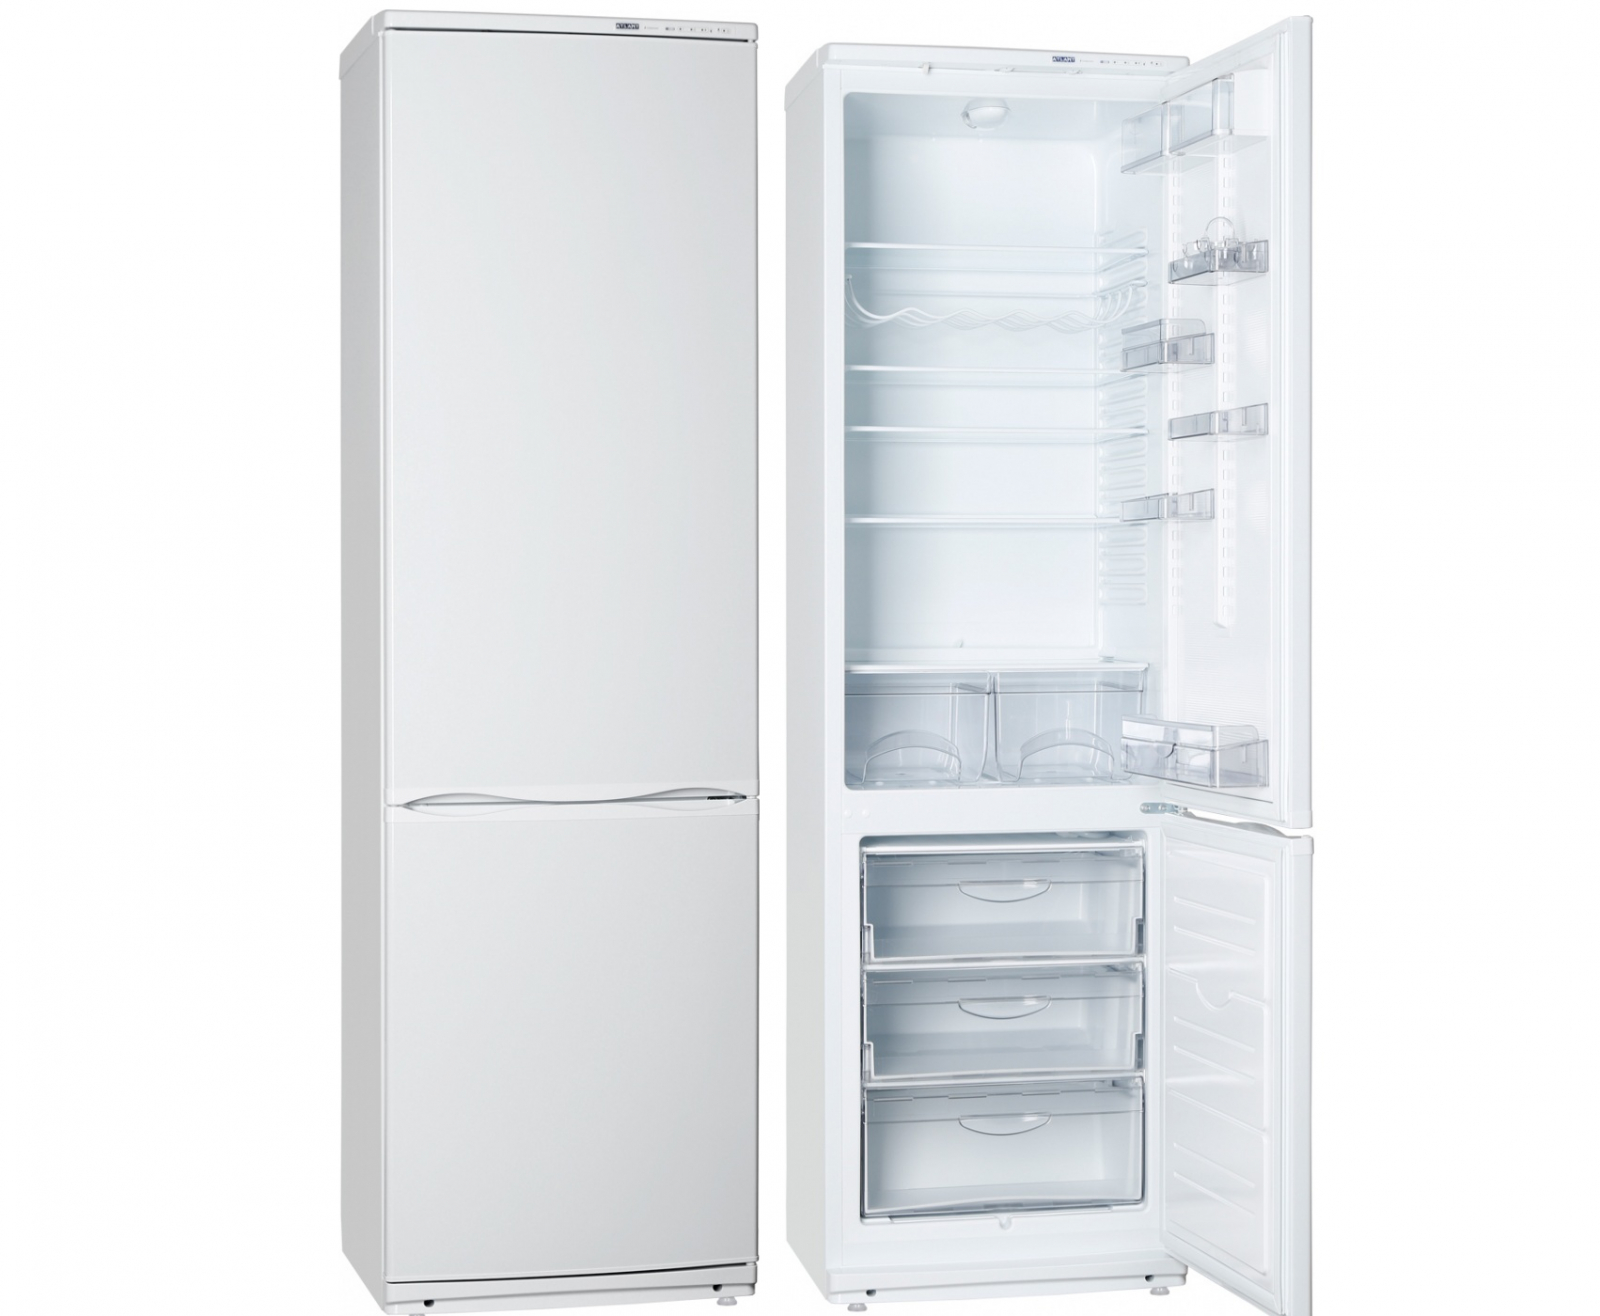 холодильник atlant xm 6026-031, купить в Красноярске холодильник atlant xm 6026-031,  купить в Красноярске дешево холодильник atlant xm 6026-031, купить в Красноярске минимальной цене холодильник atlant xm 6026-031